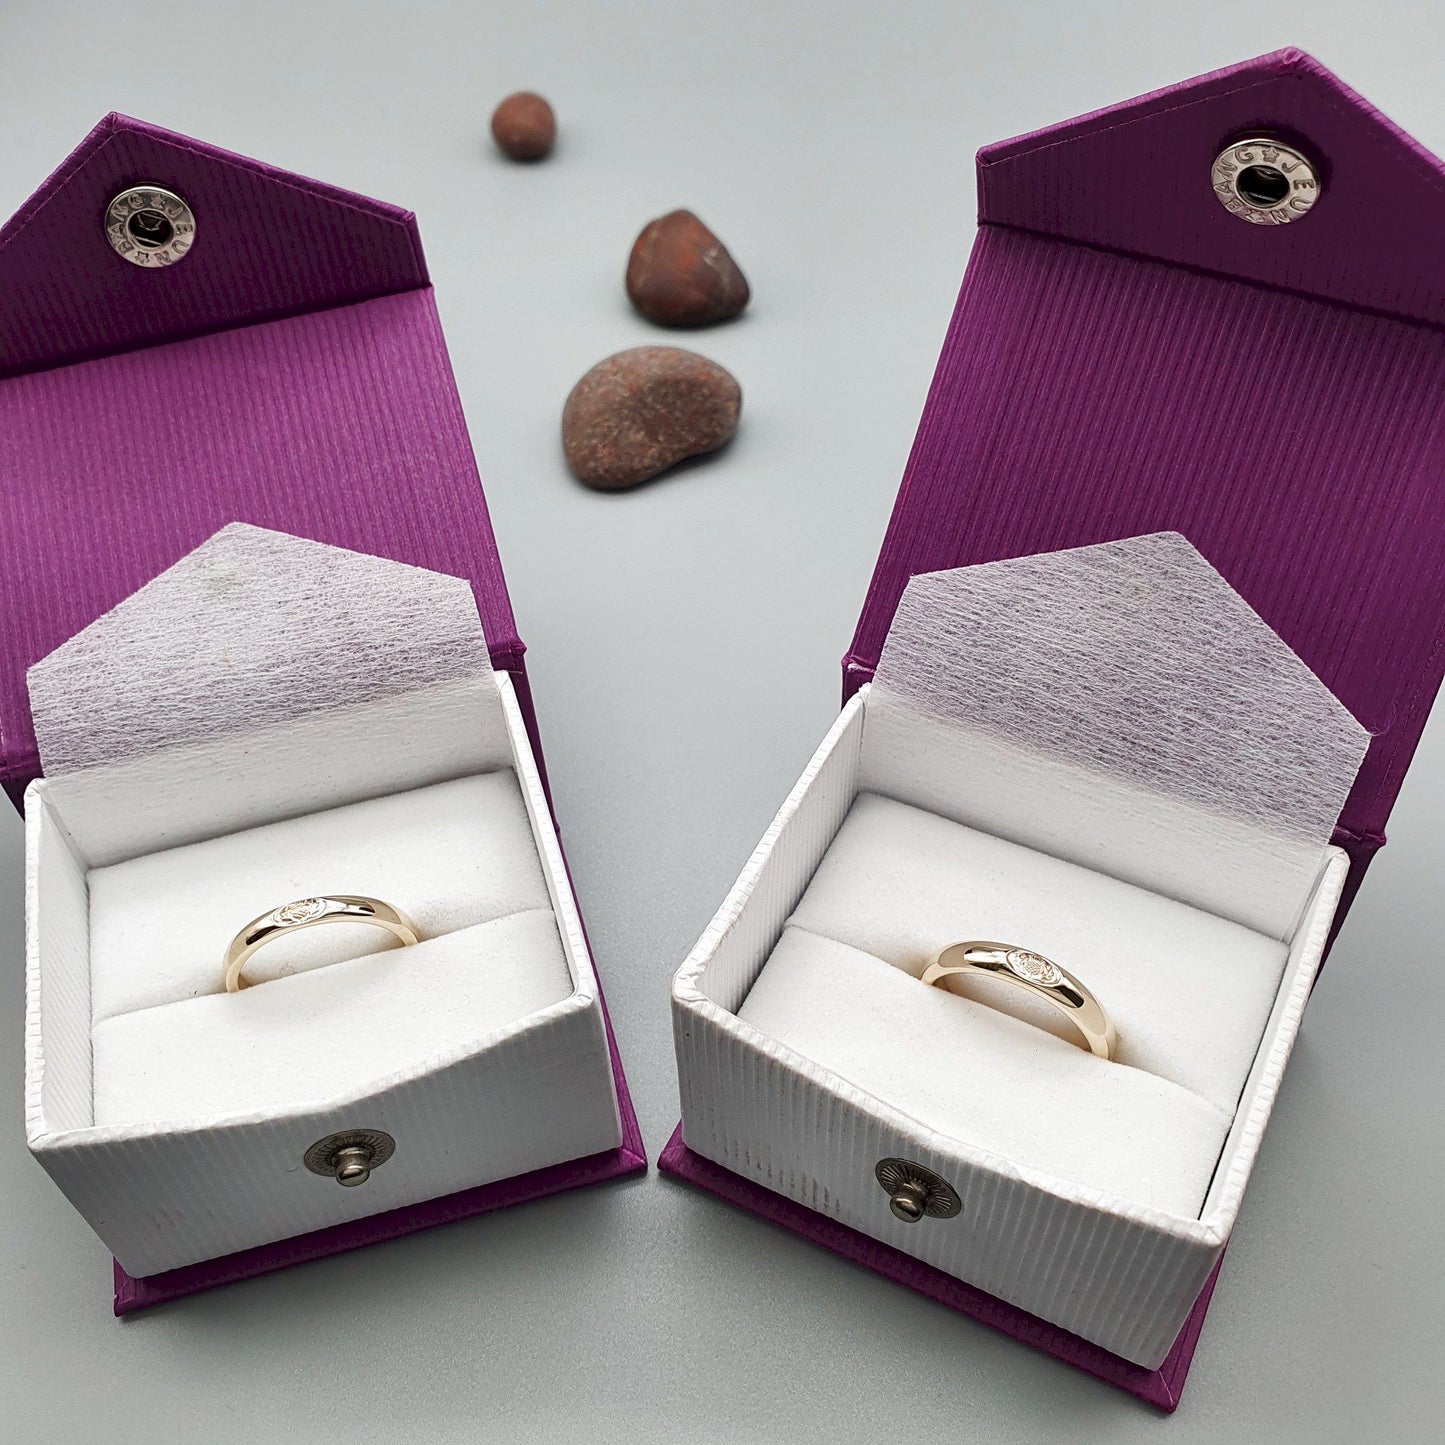 Scottish 3 & 4mm gold narrow matching ring set – Gretna Green Wedding Rings